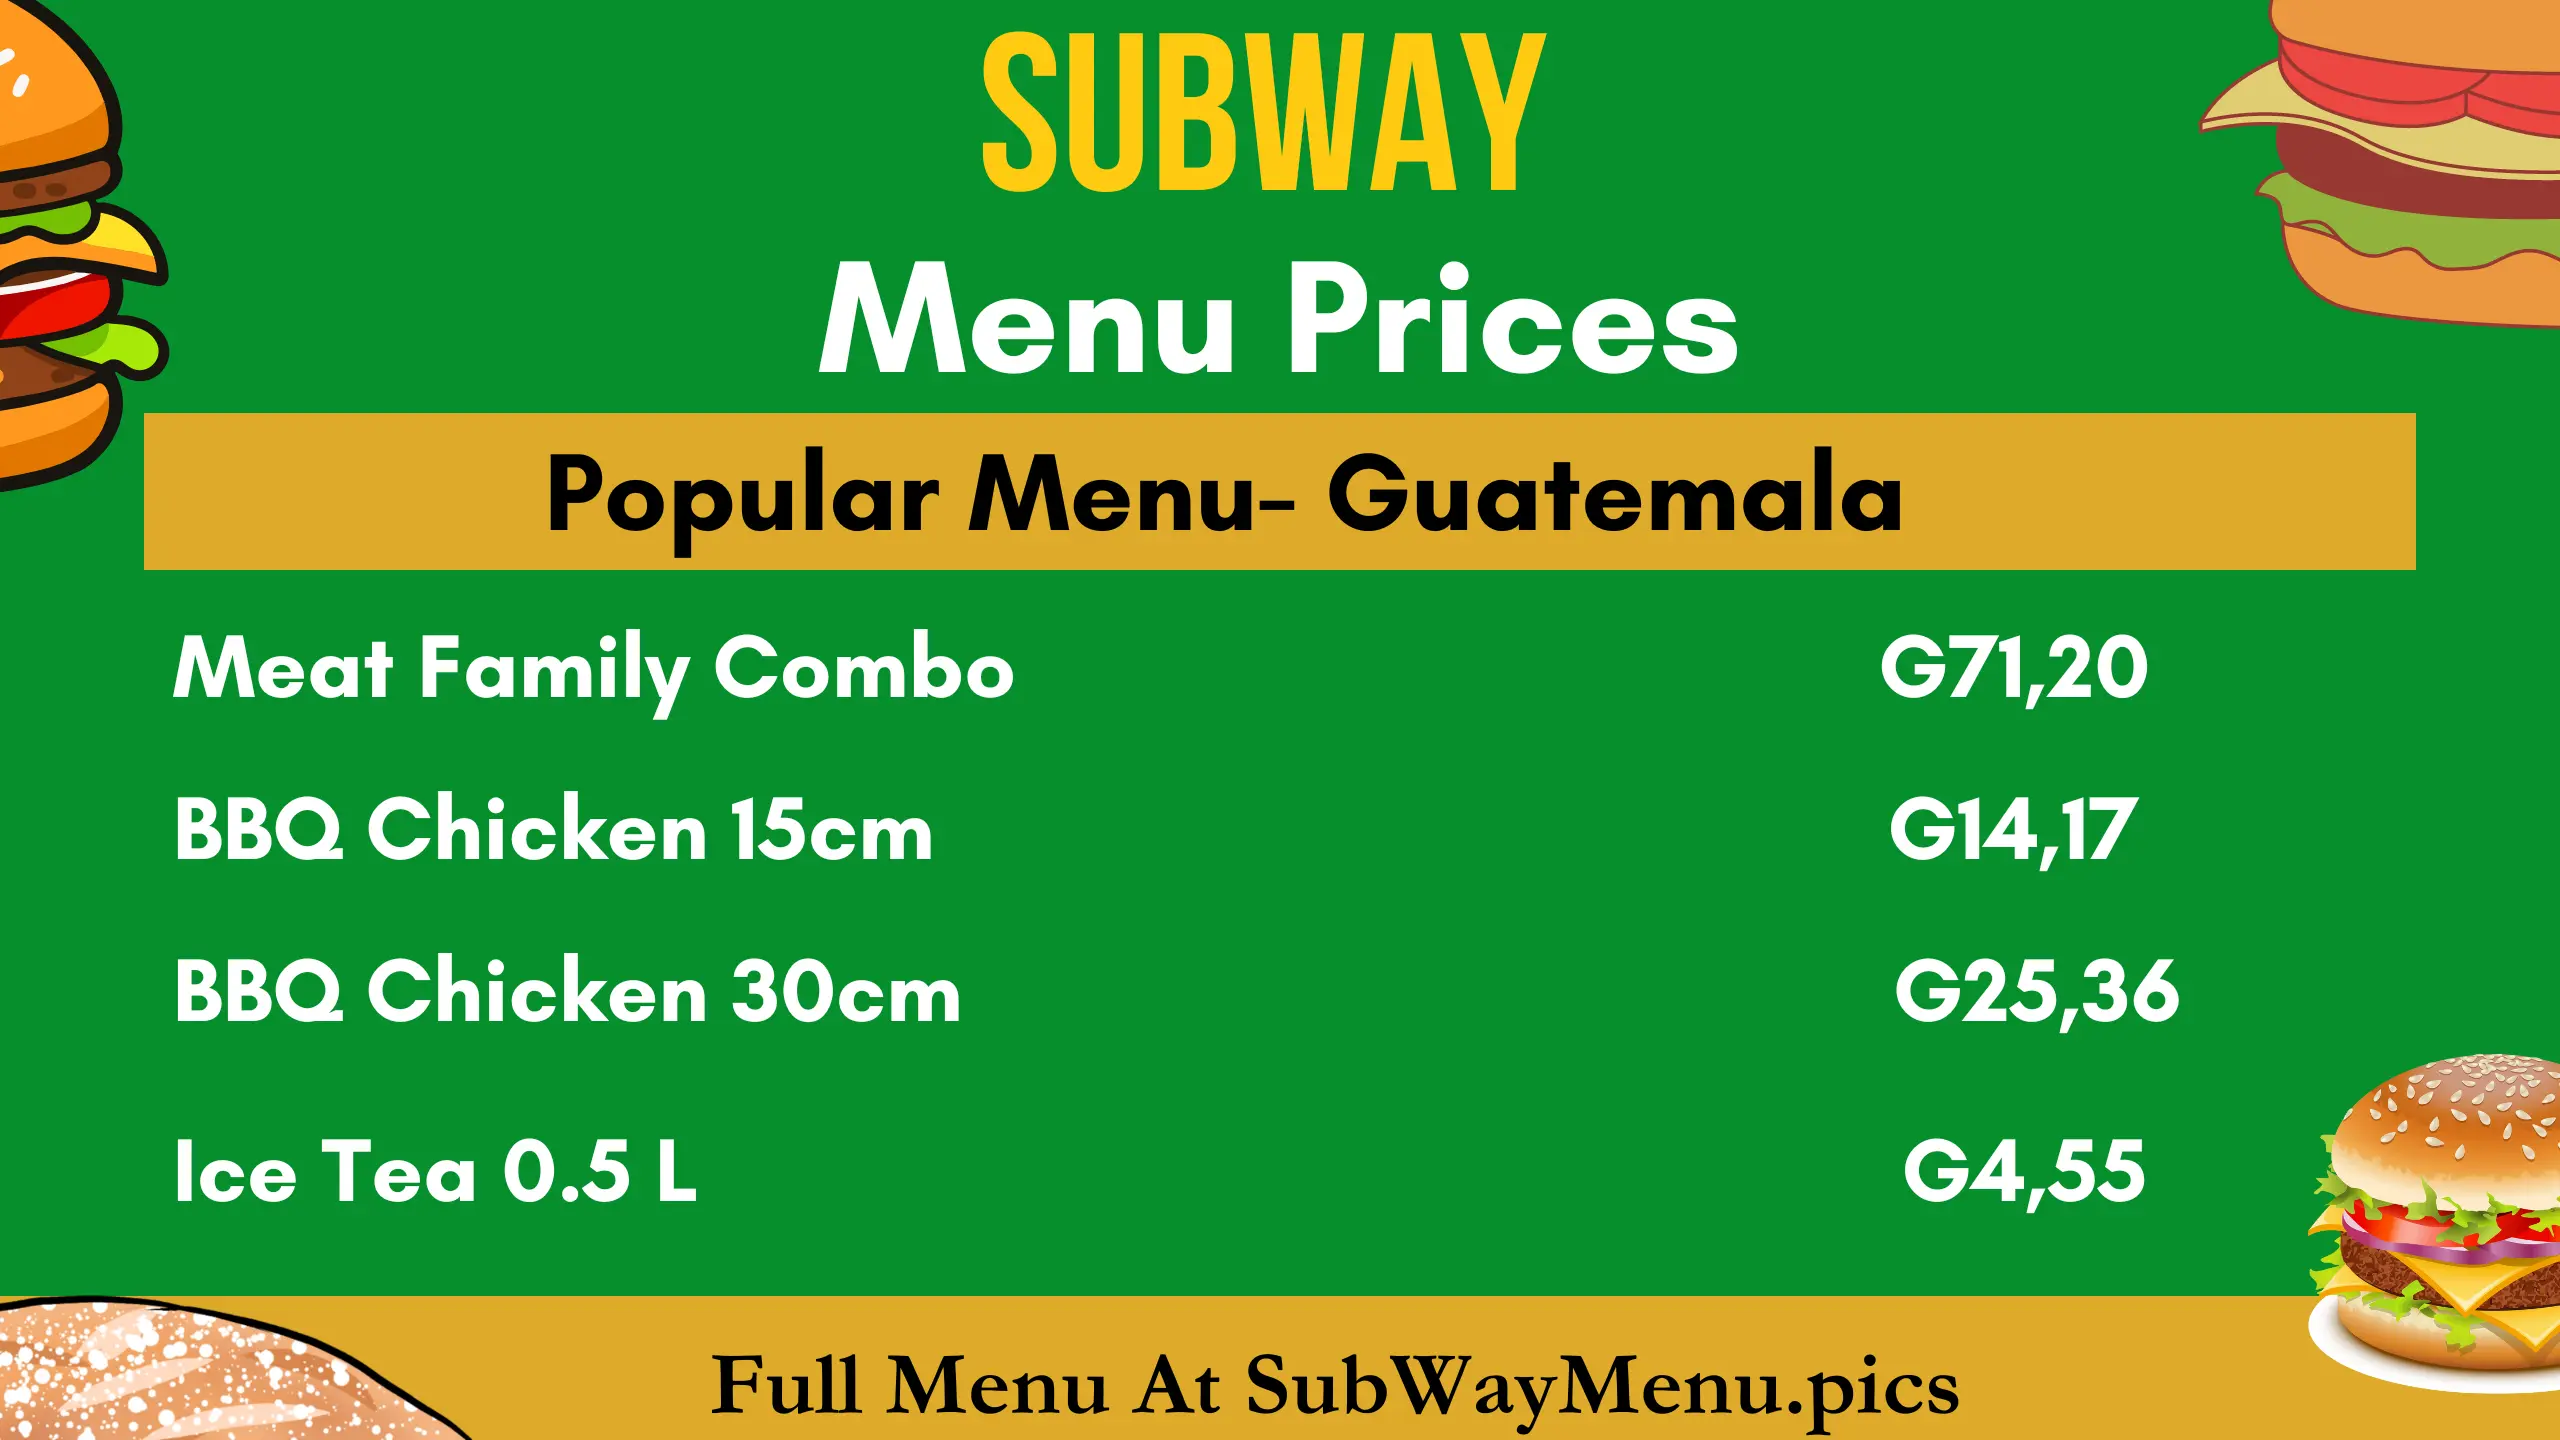 Subway Menu Prices (Georgia)